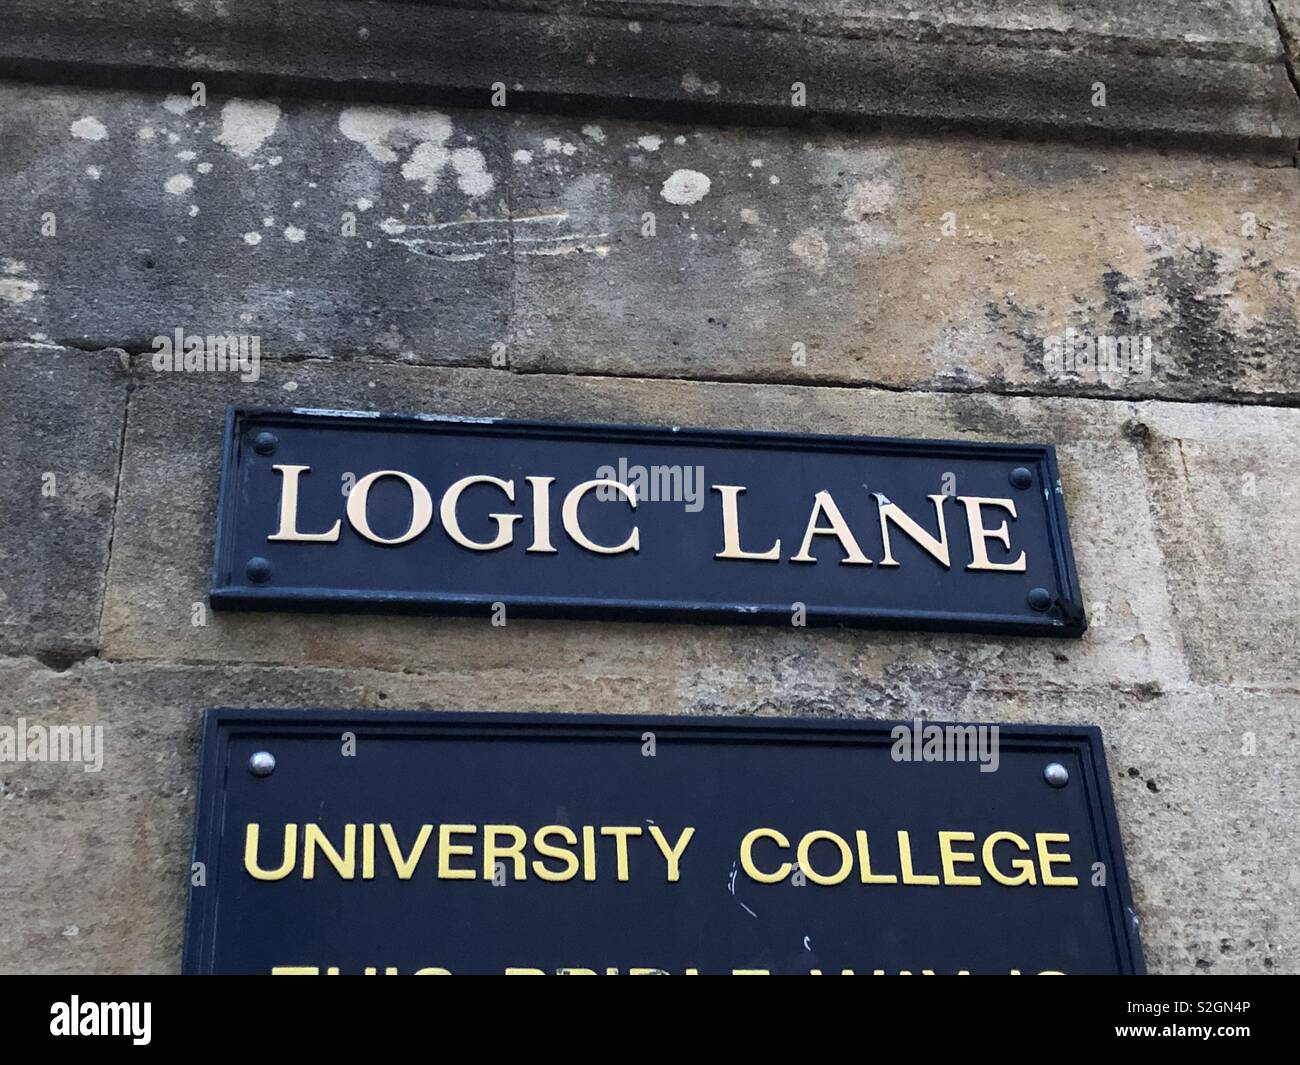 Image of Logic Lane street sign, at University College, Oxford University. Stock Photo